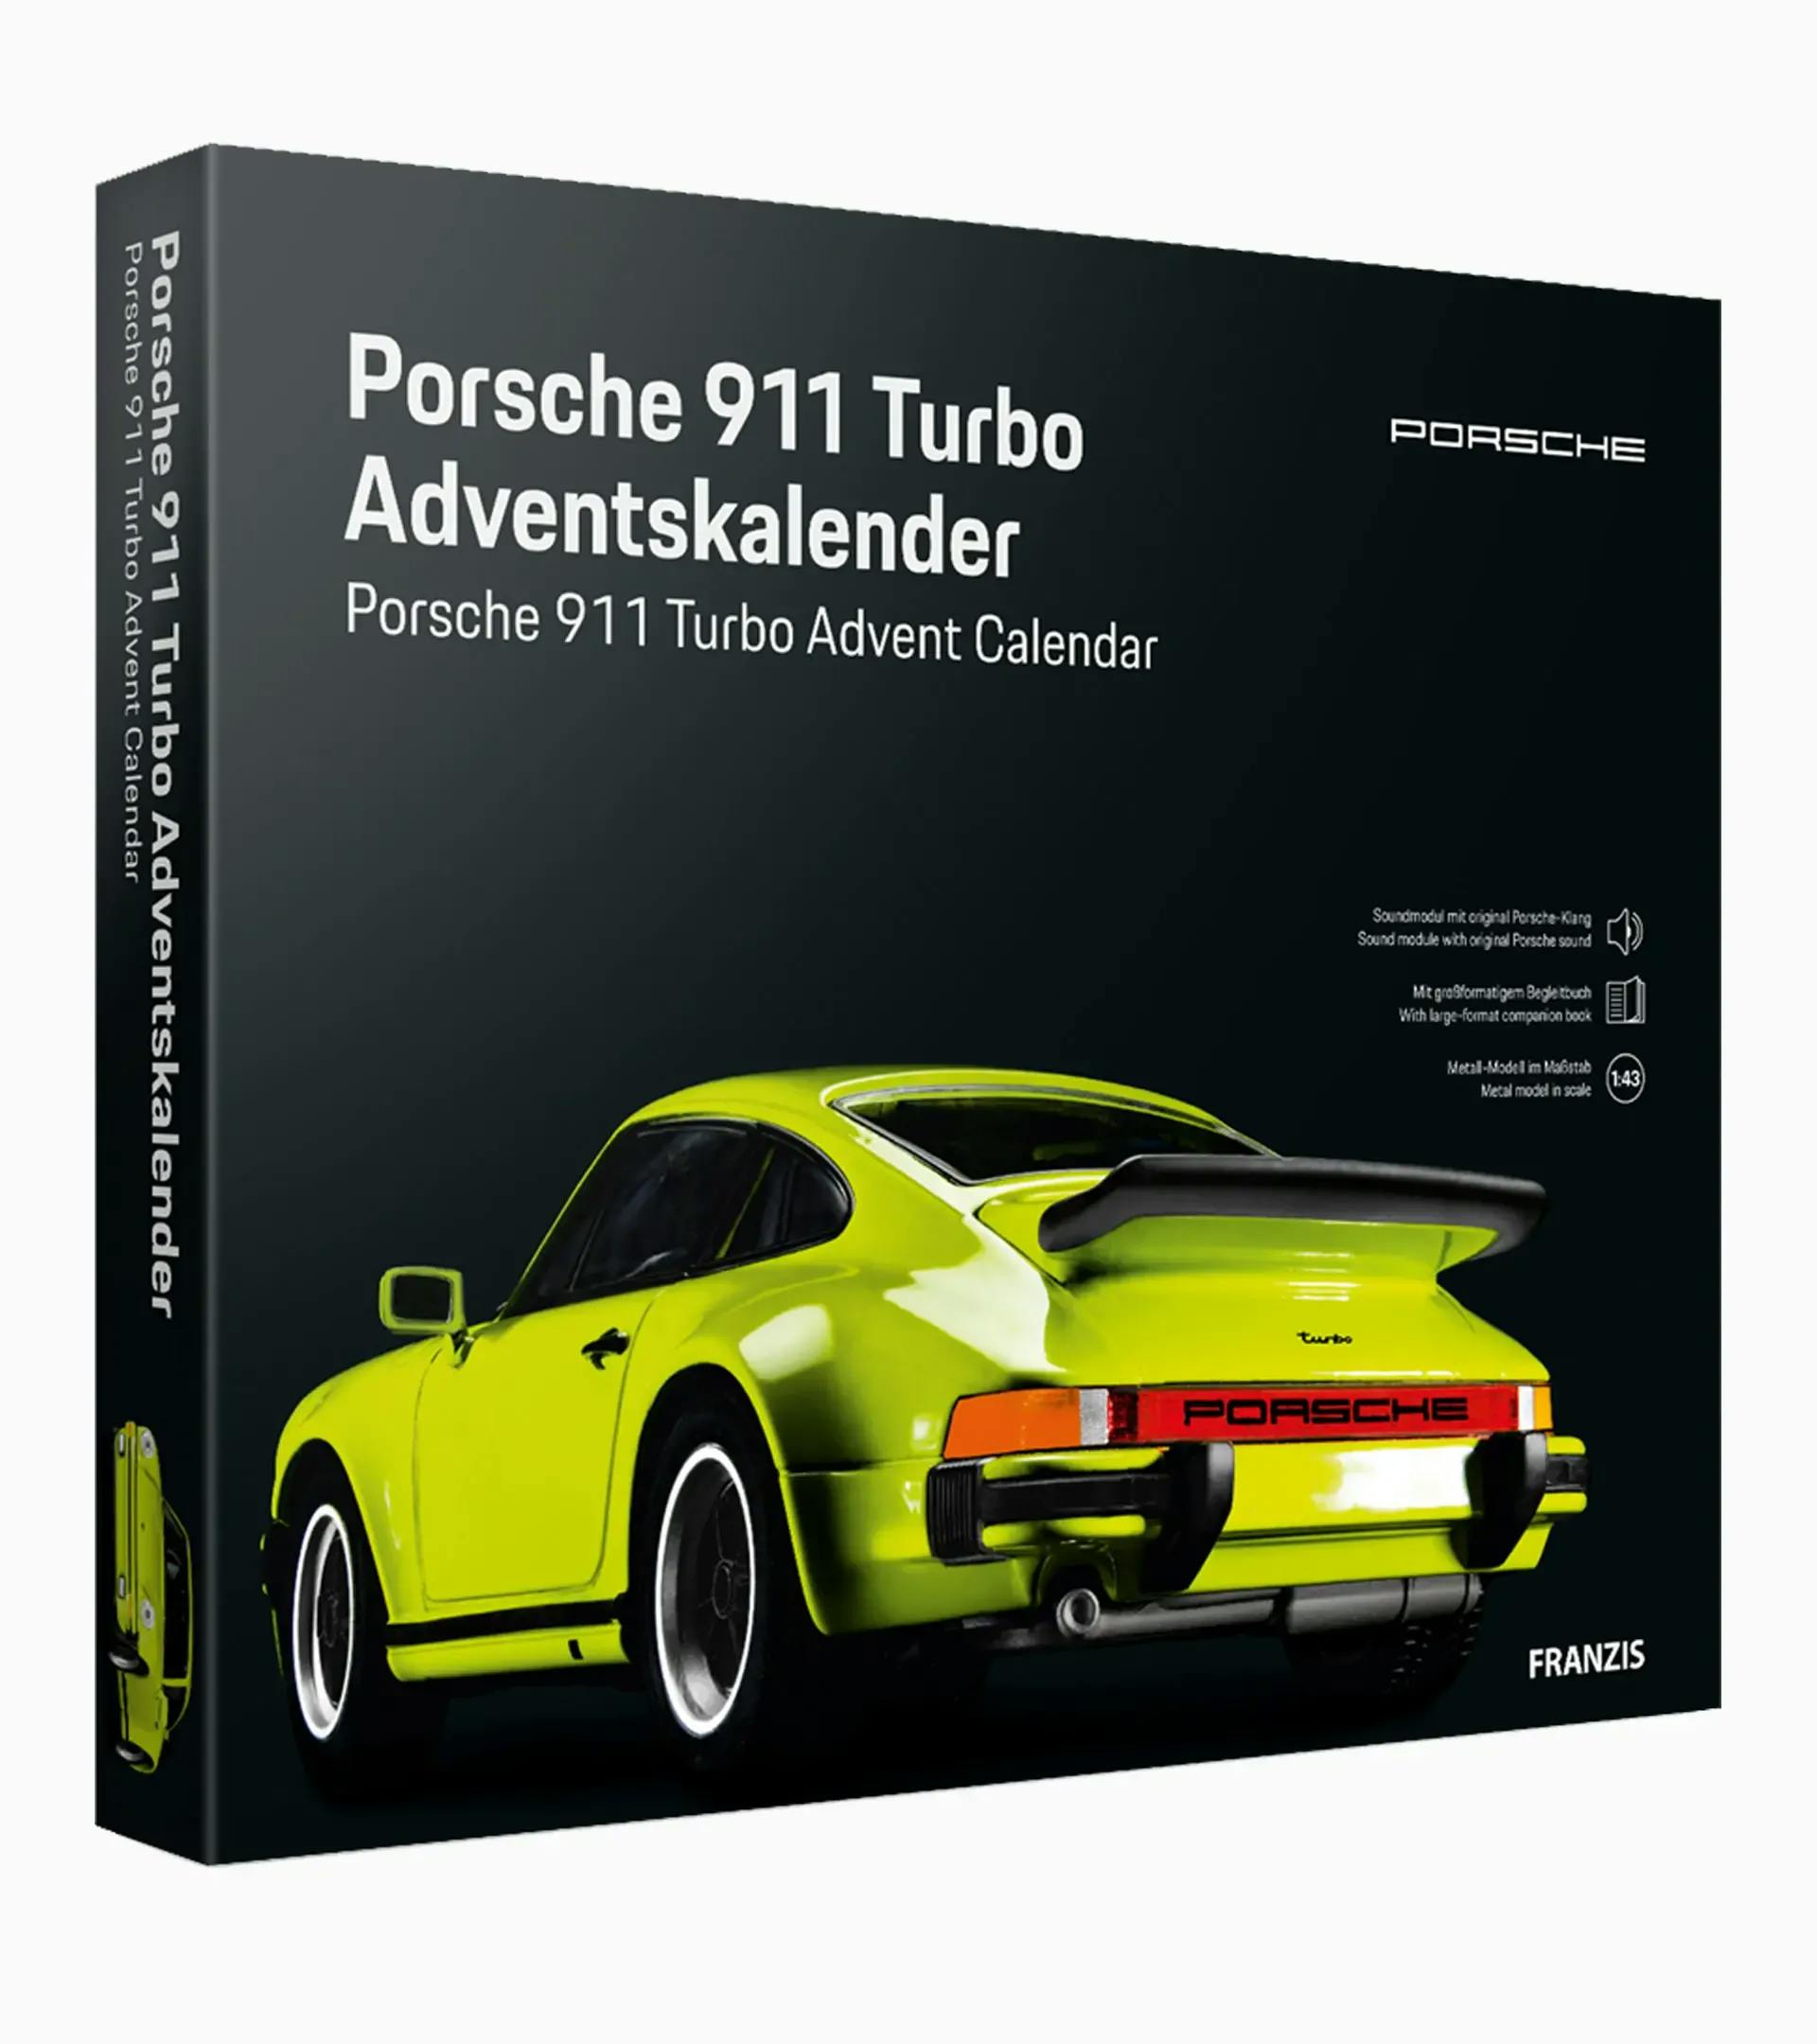 Porsche 911 Turbo advent calendar 1